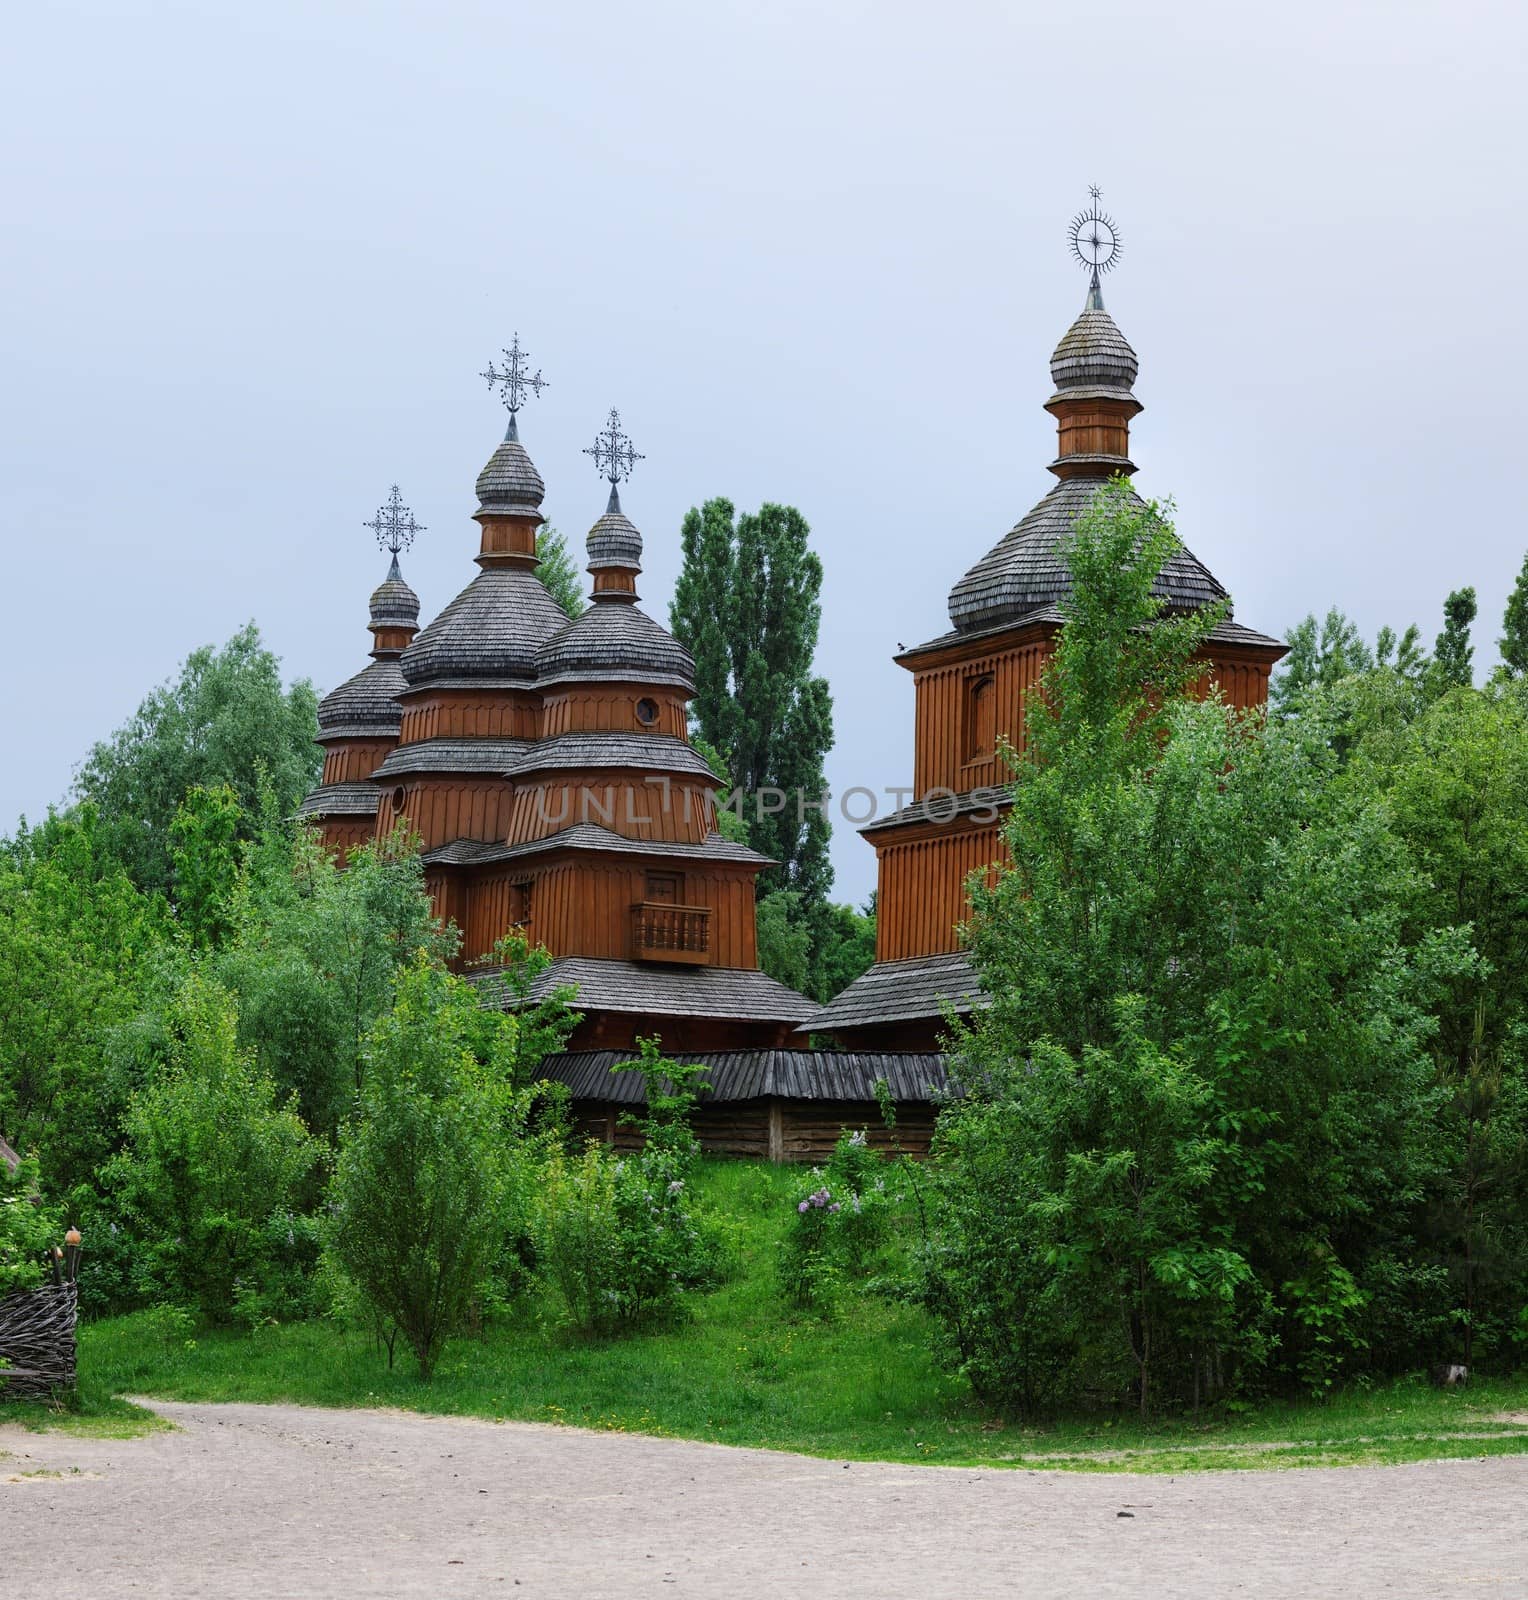 Reconstruction of an ancient wooden church in open air museum, Kiev, Ukraine